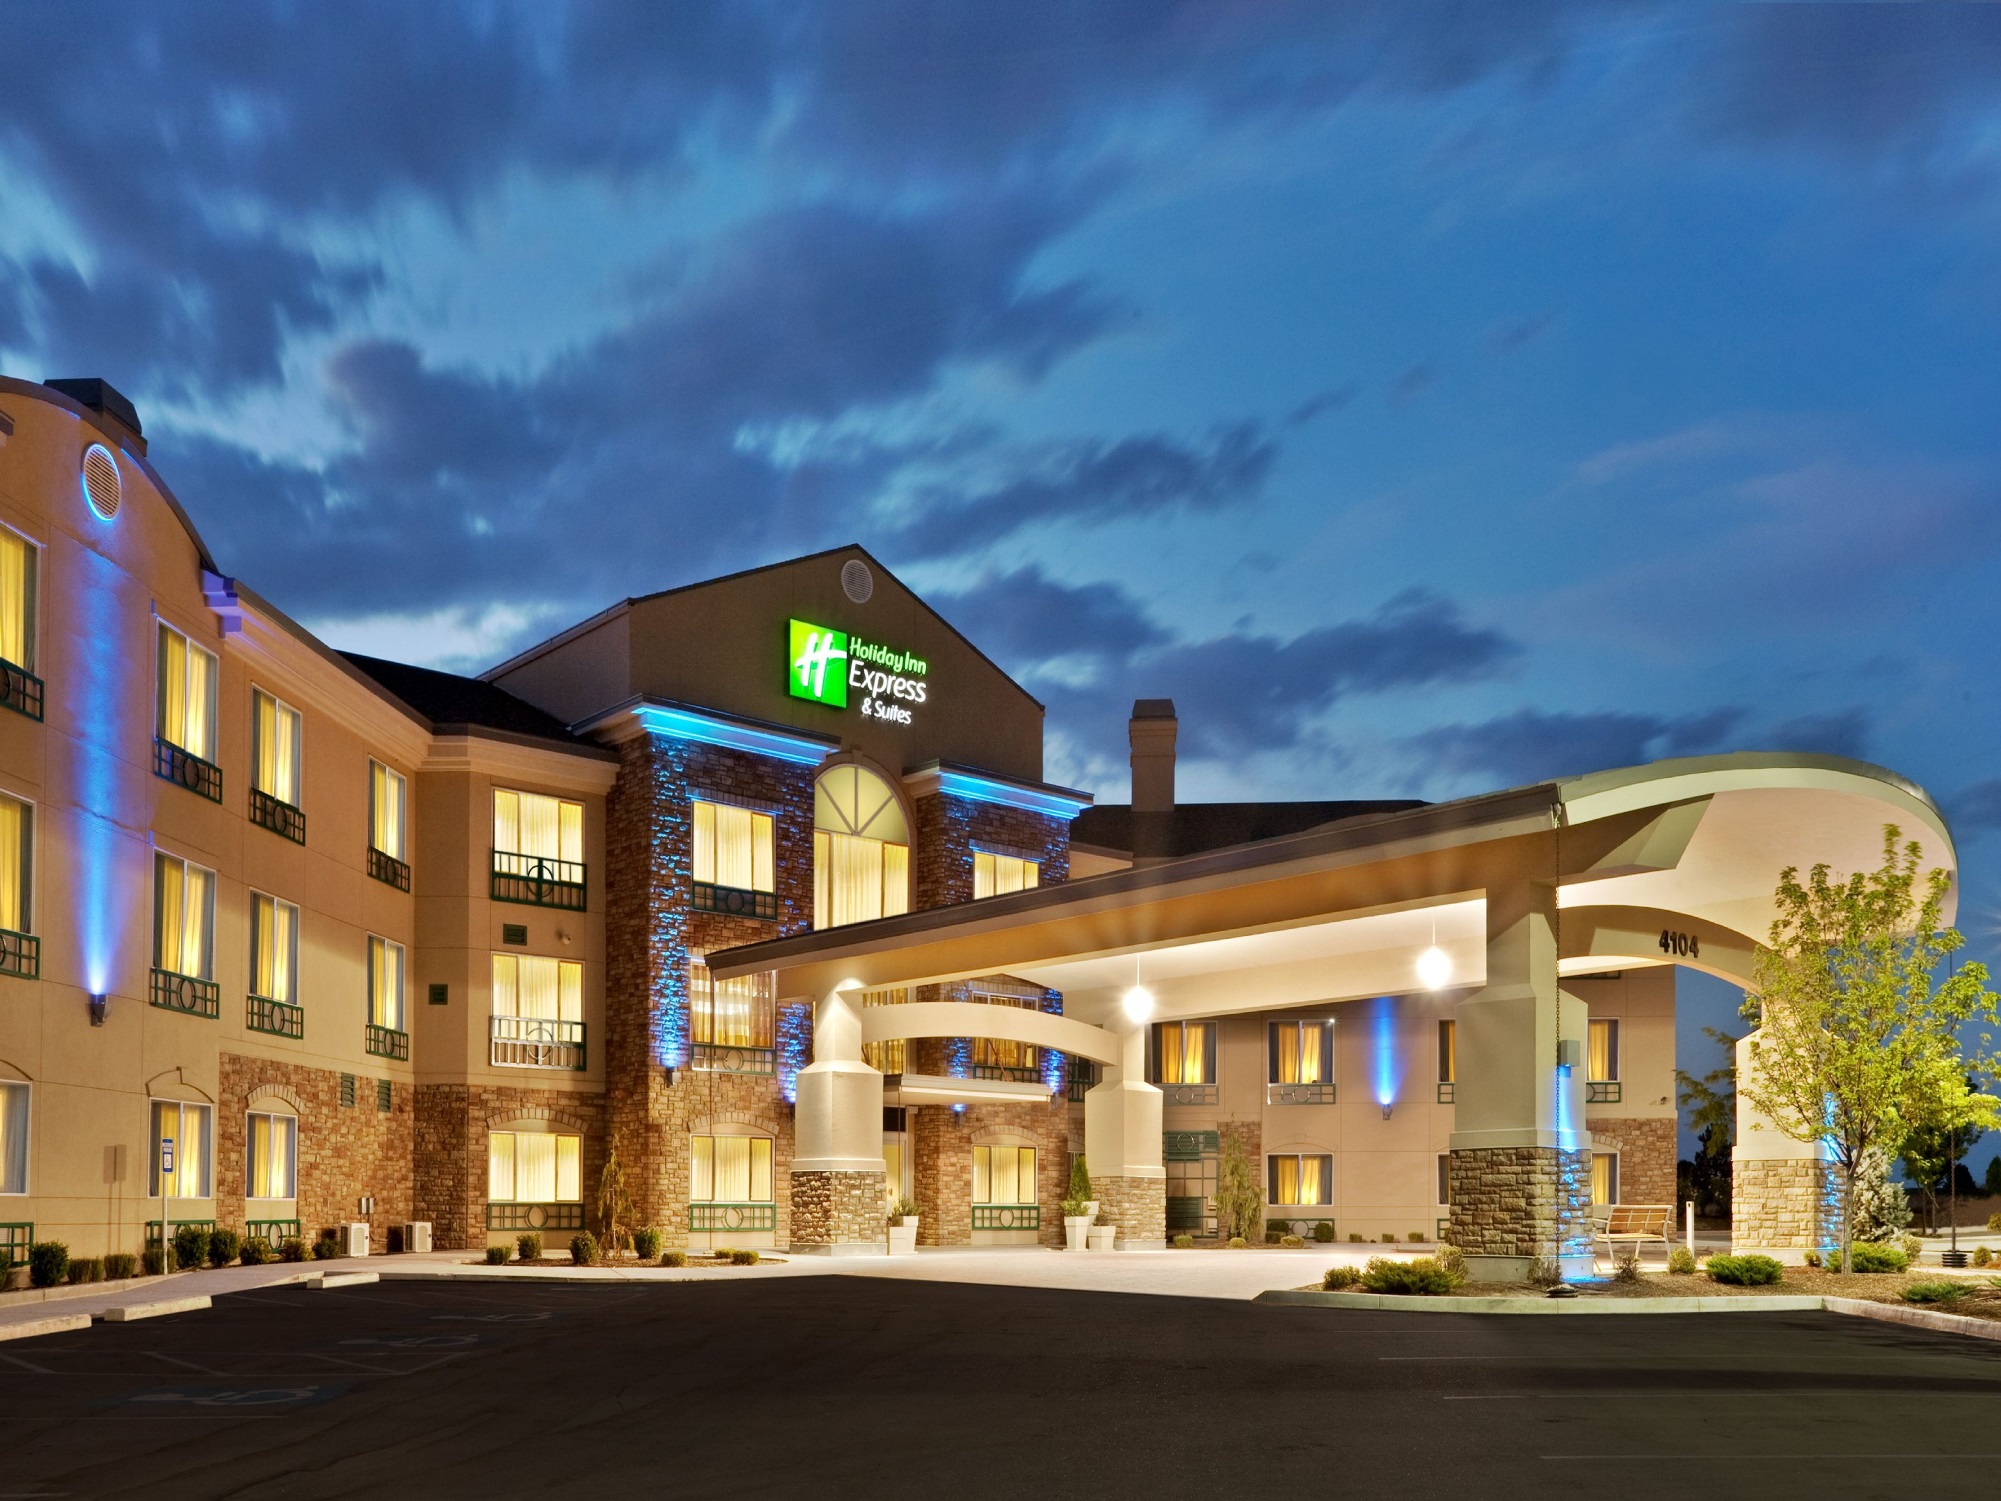 Holiday Inn Express & Suites Idaho Center - Nampa, ID ...